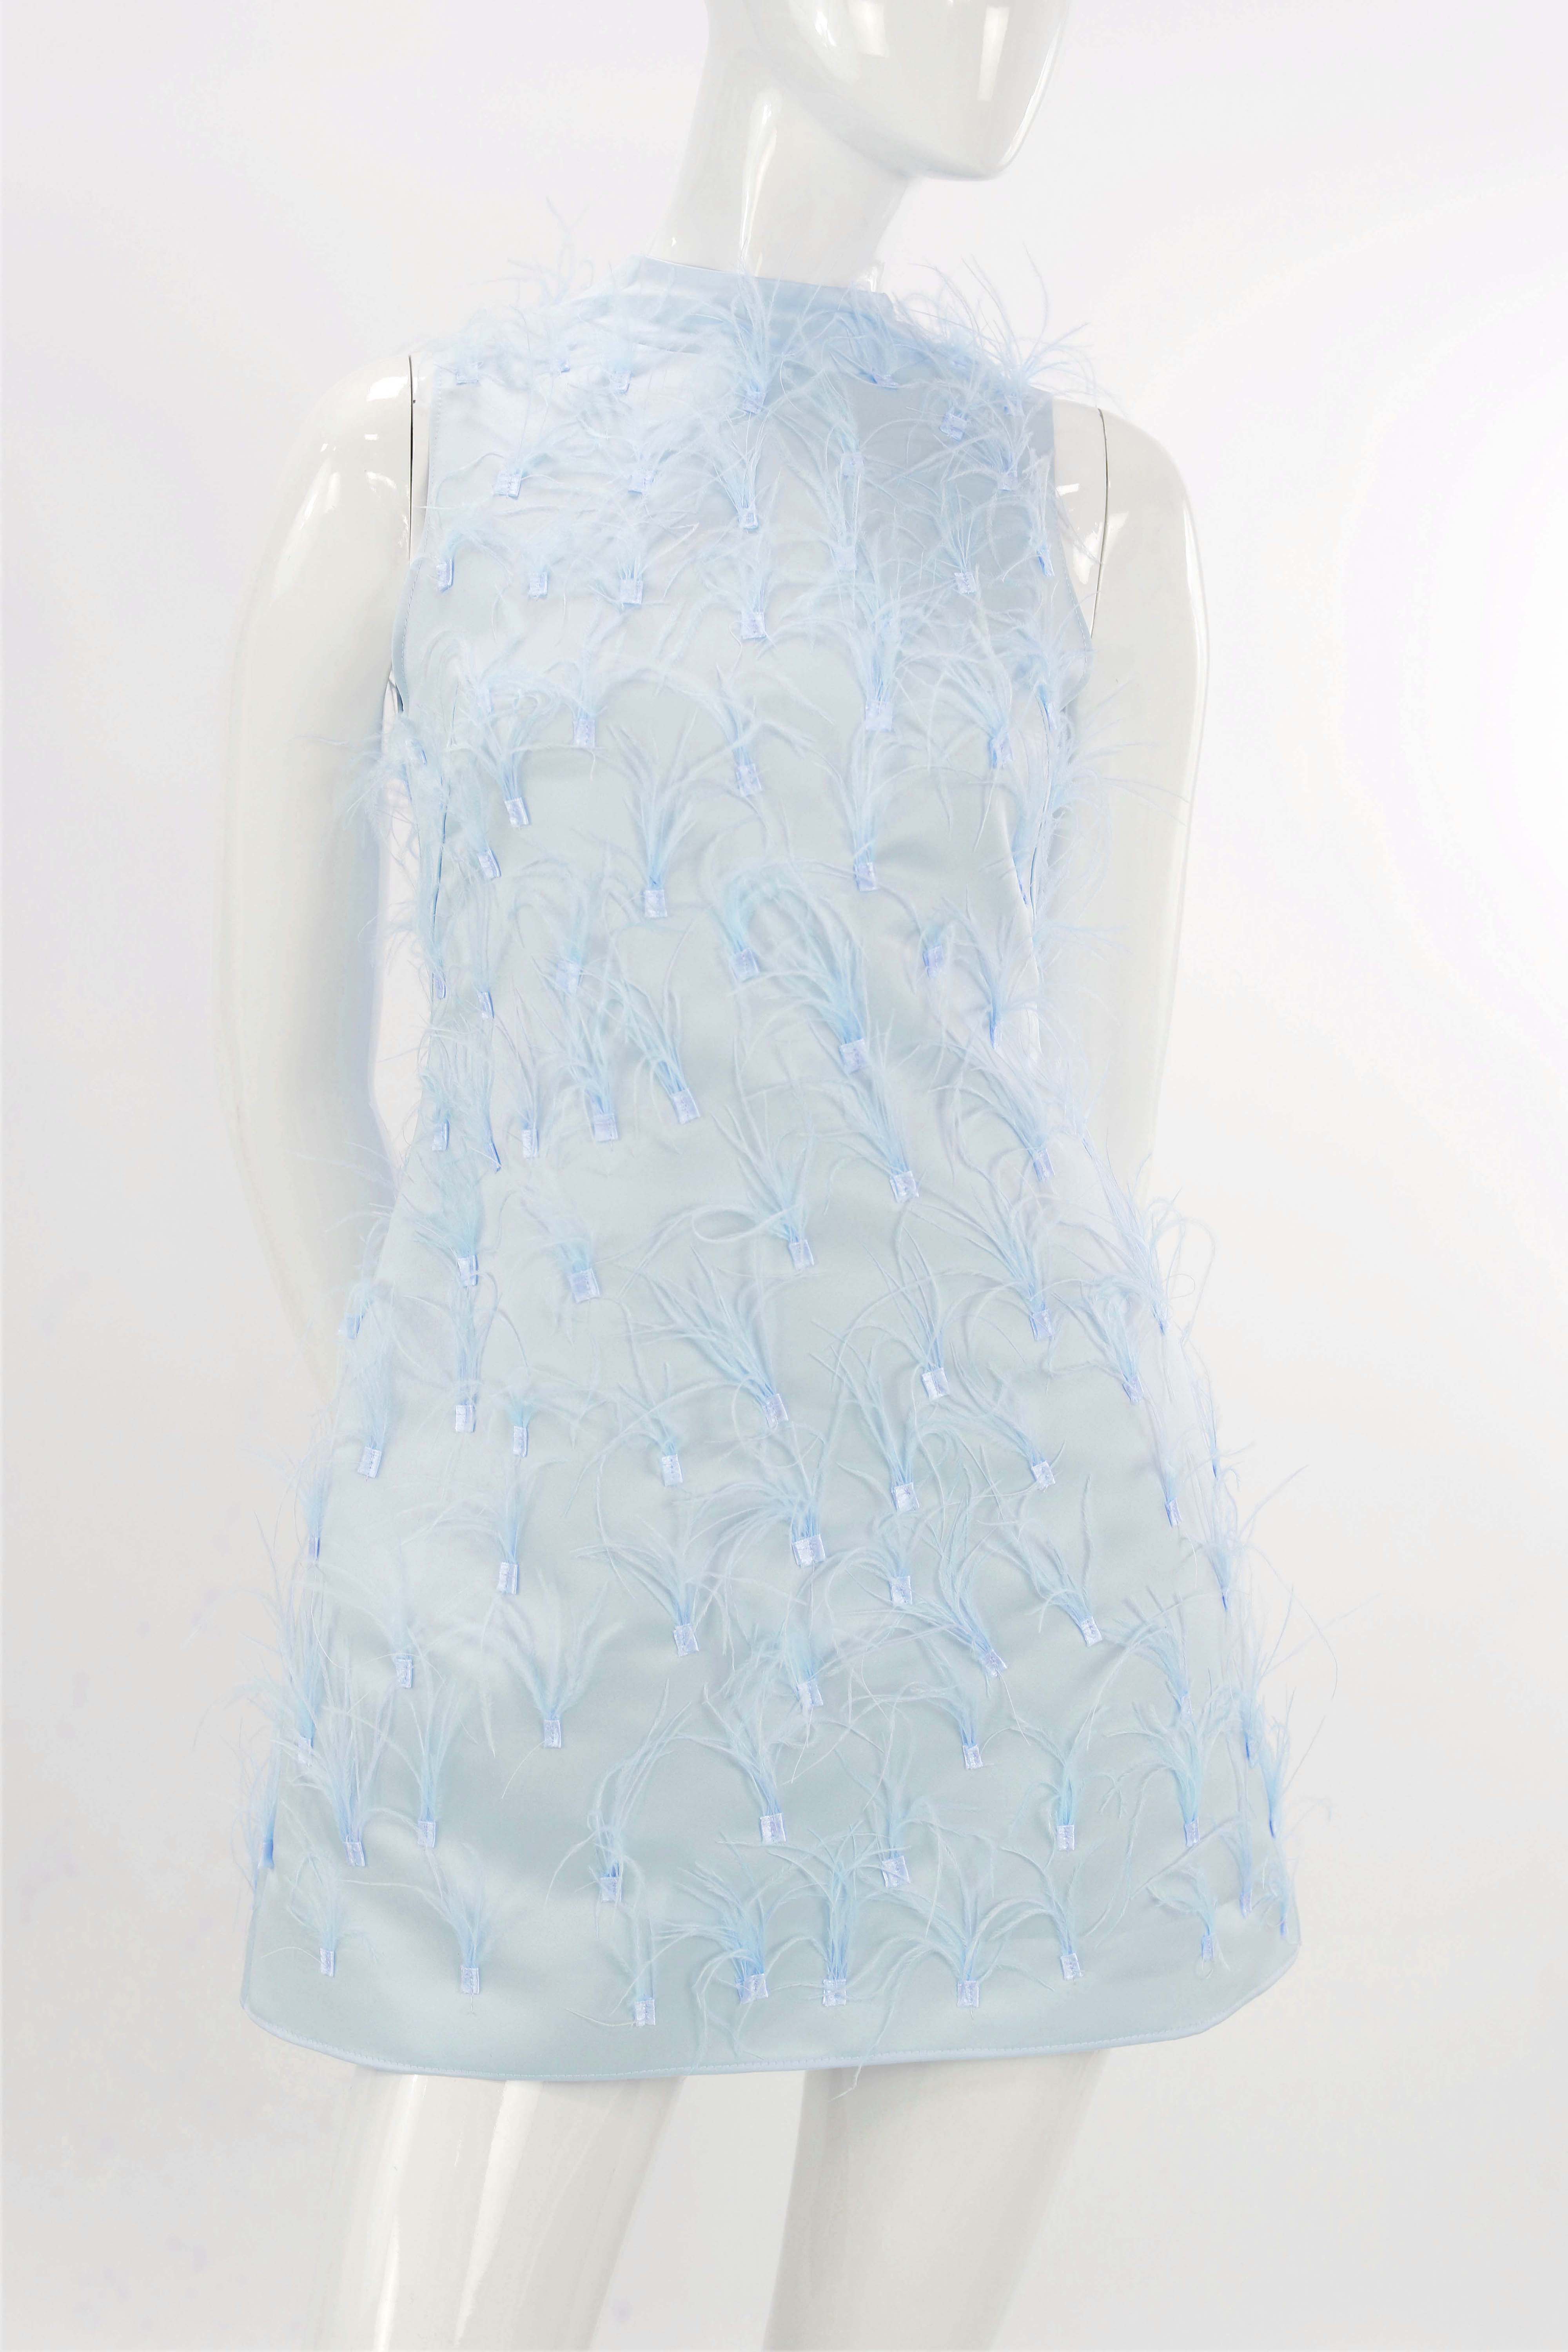 R23101 - LIGHT BLUE 01 - ALMEEA light blue mini dress with feathers - AMBAR STUDIO